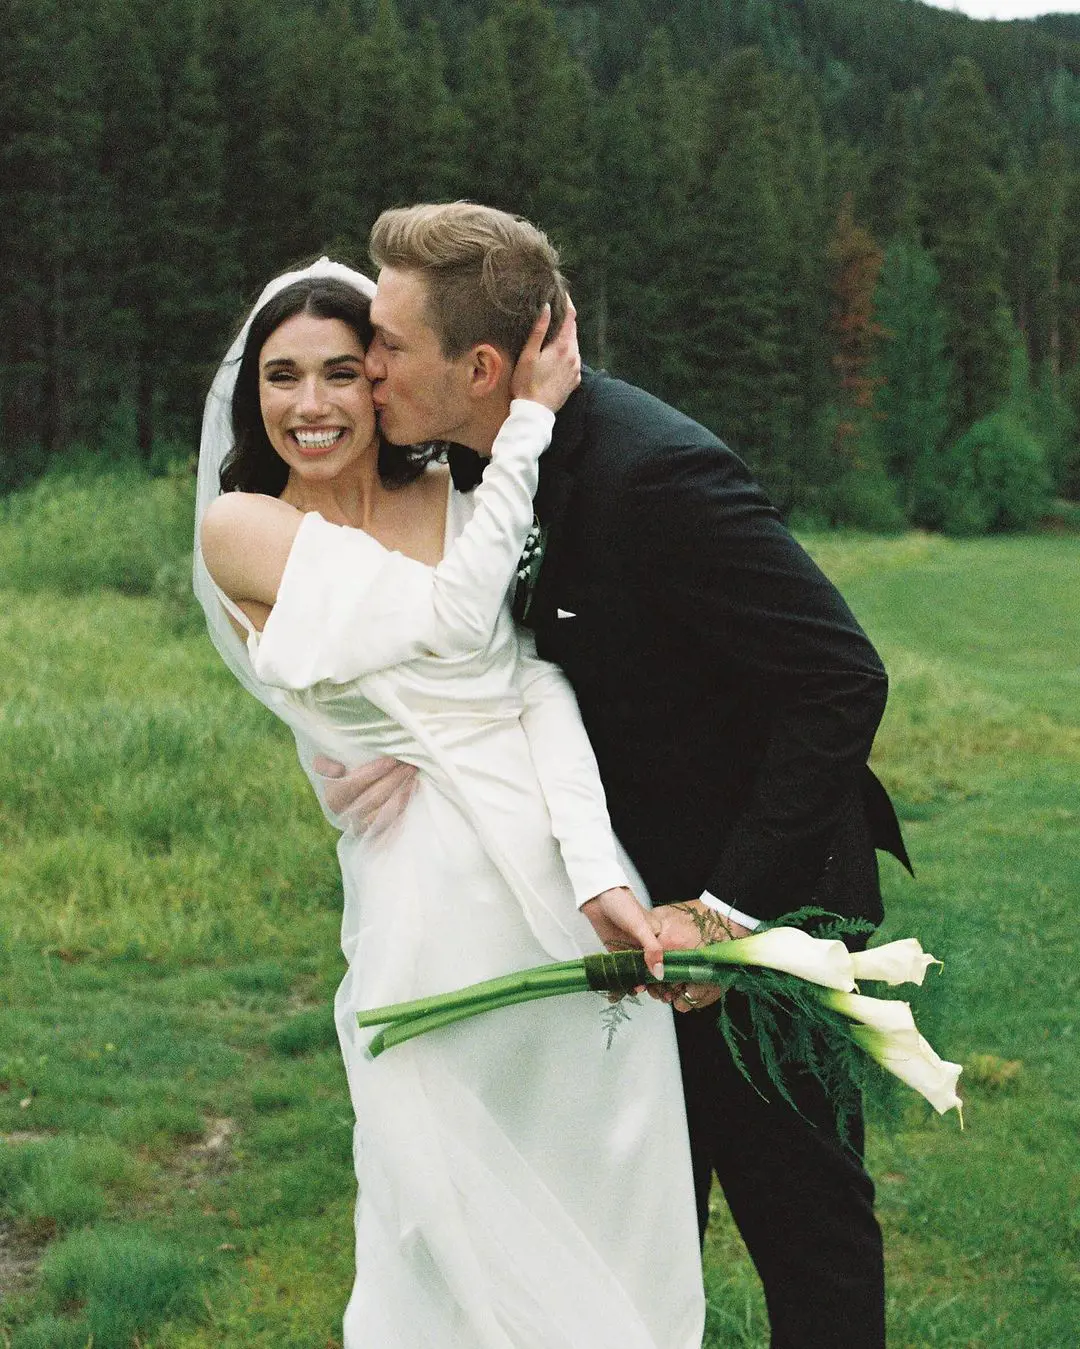 The wedding was held at Camp Hale in Colorado